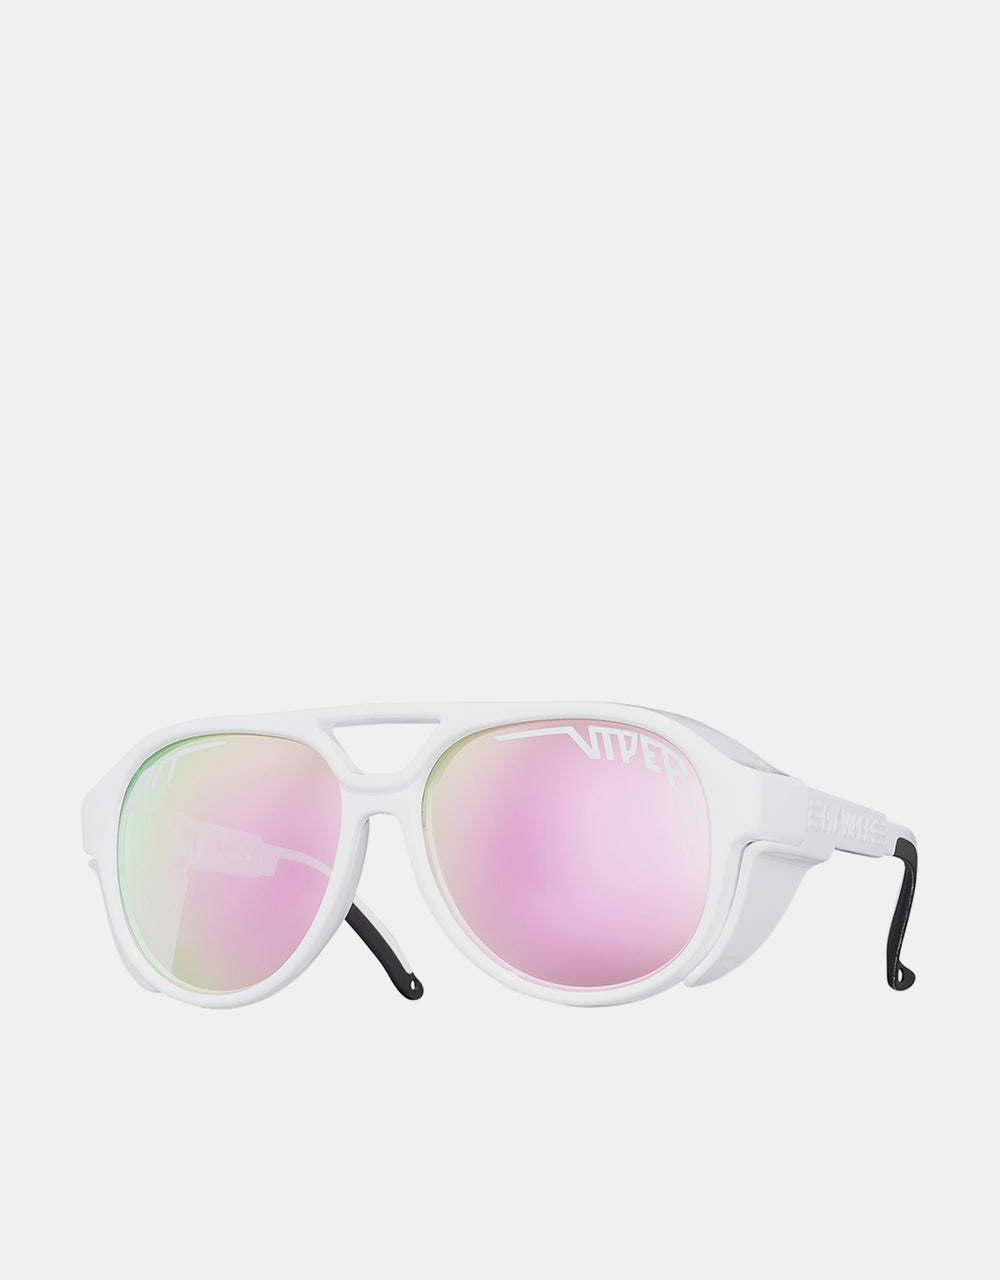 Pit Viper Miami Nights Exciter Sunglasses - Pink Revo Mirror – Route One